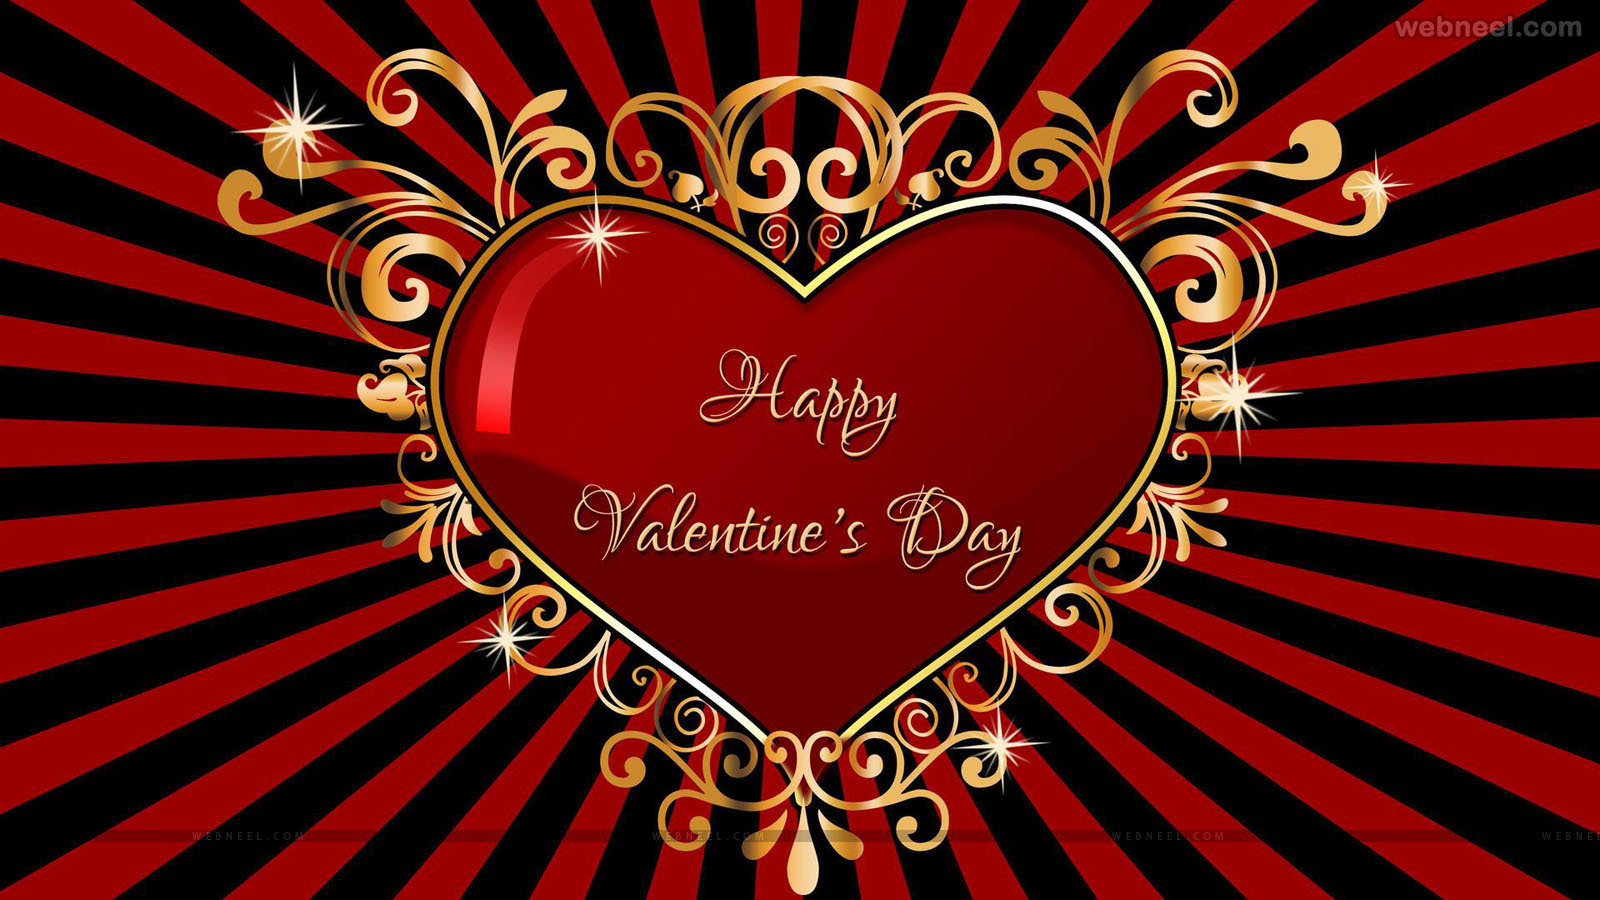 happy valentine day wallpaper hd,heart,red,valentine's day,text,love